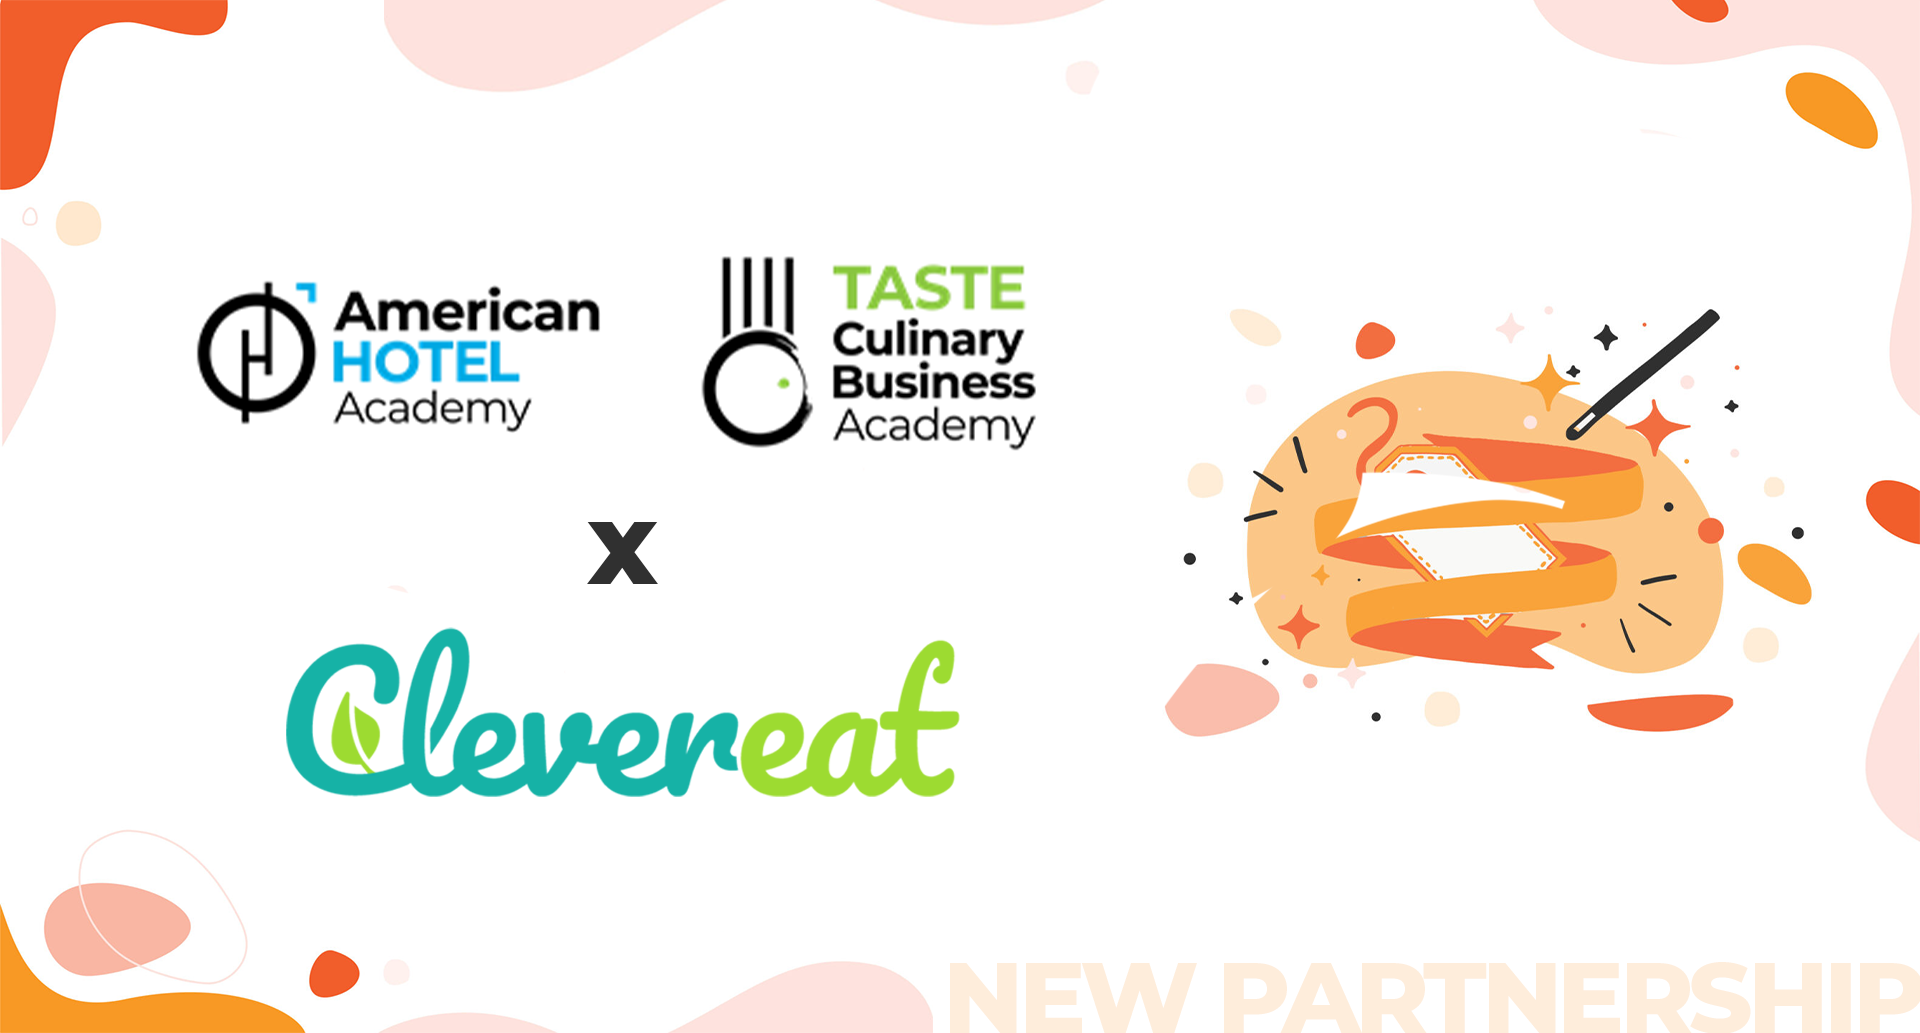 clevereat partnership announcement image